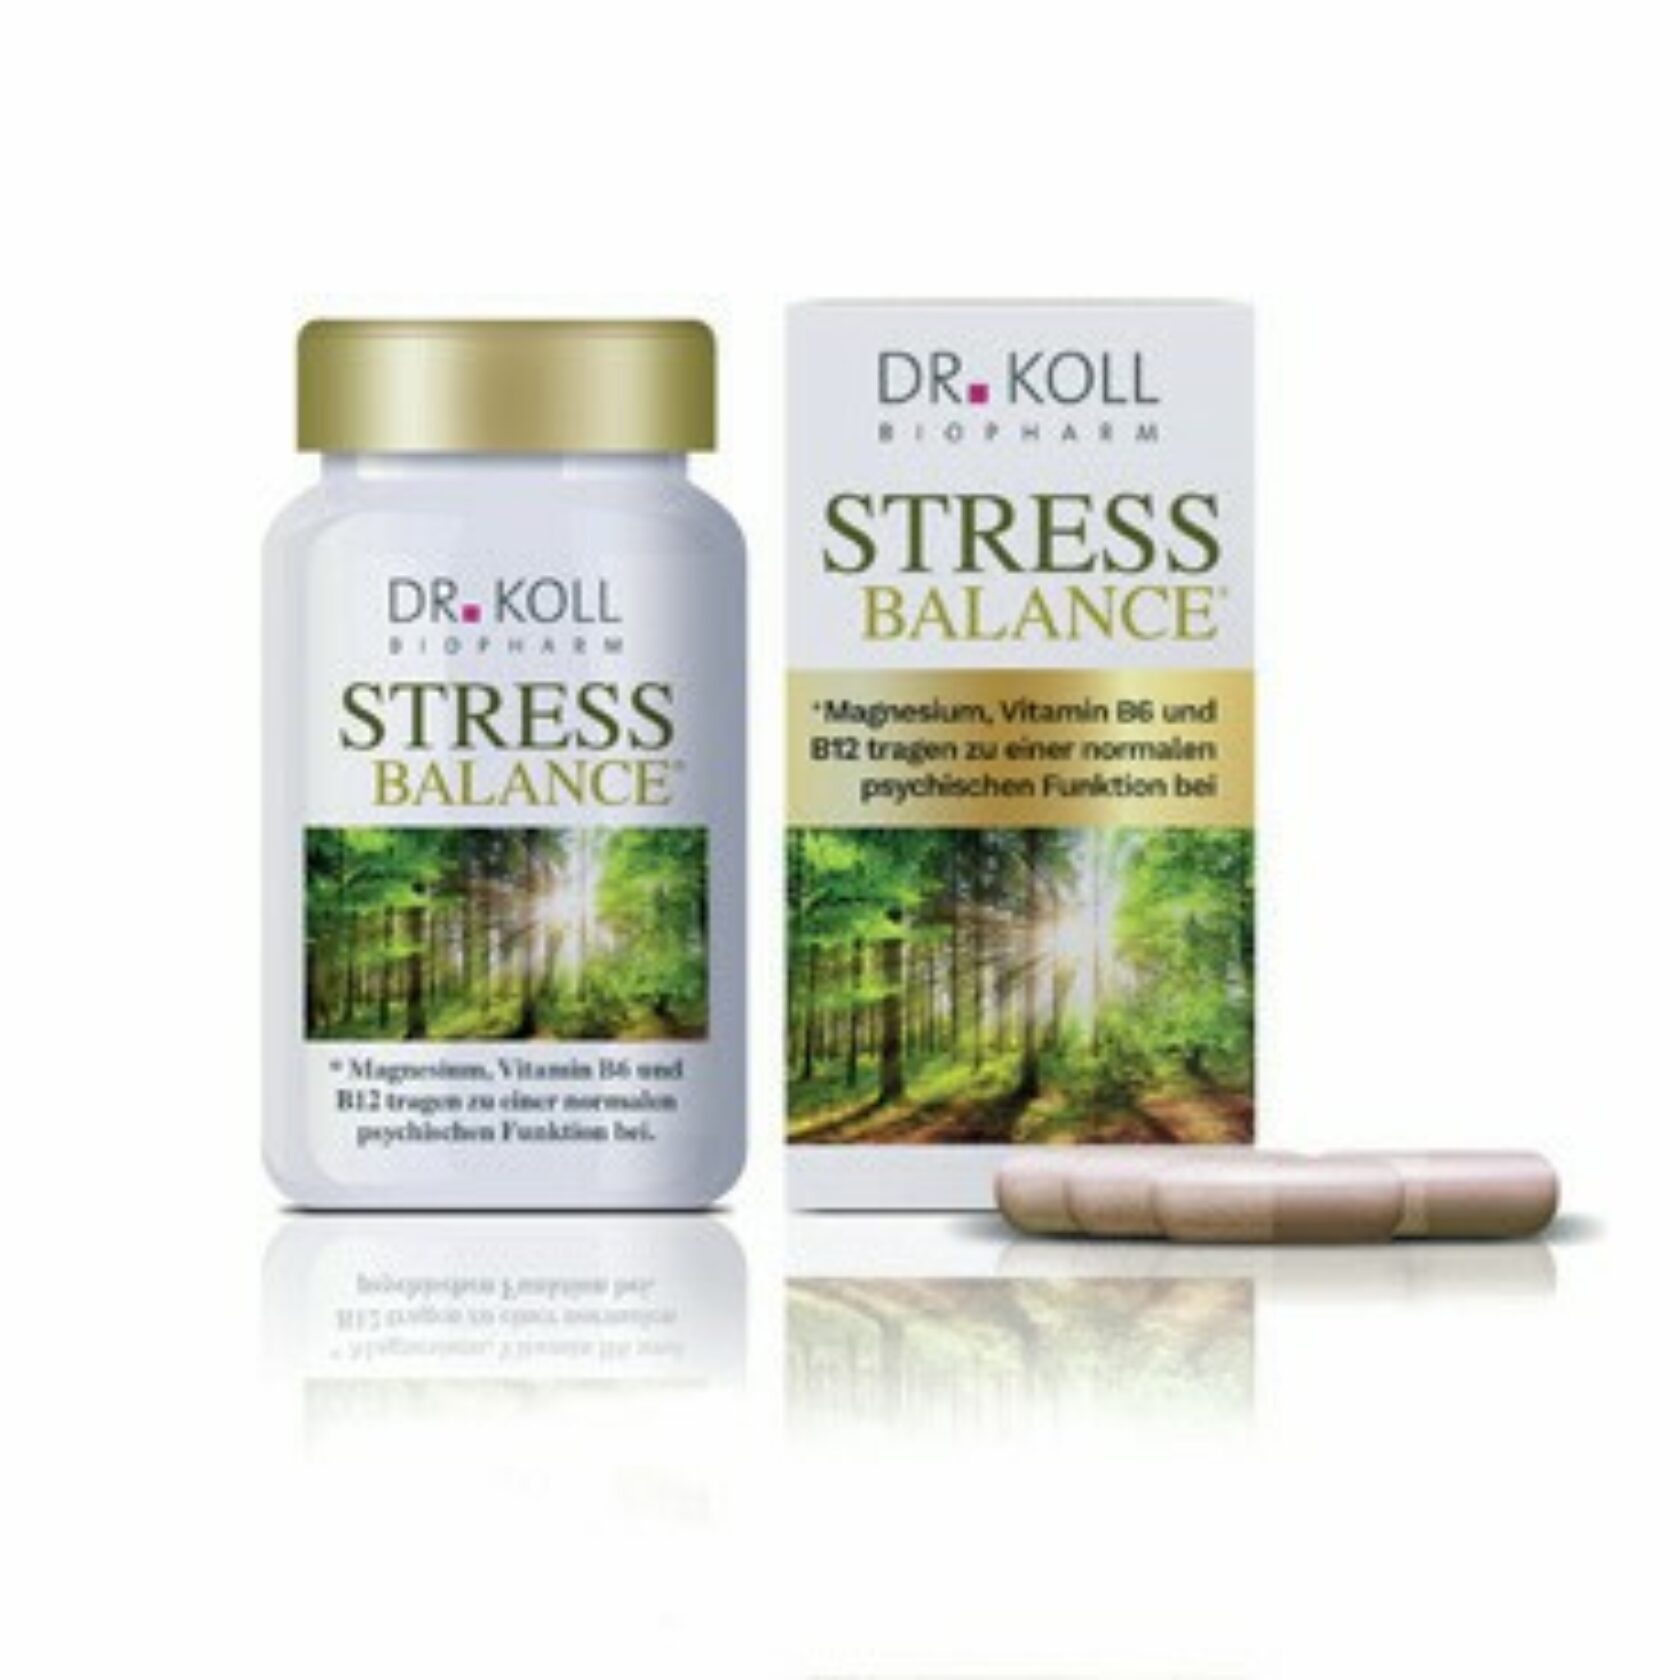 Produktpackung von Dr. Koll Stress Balance